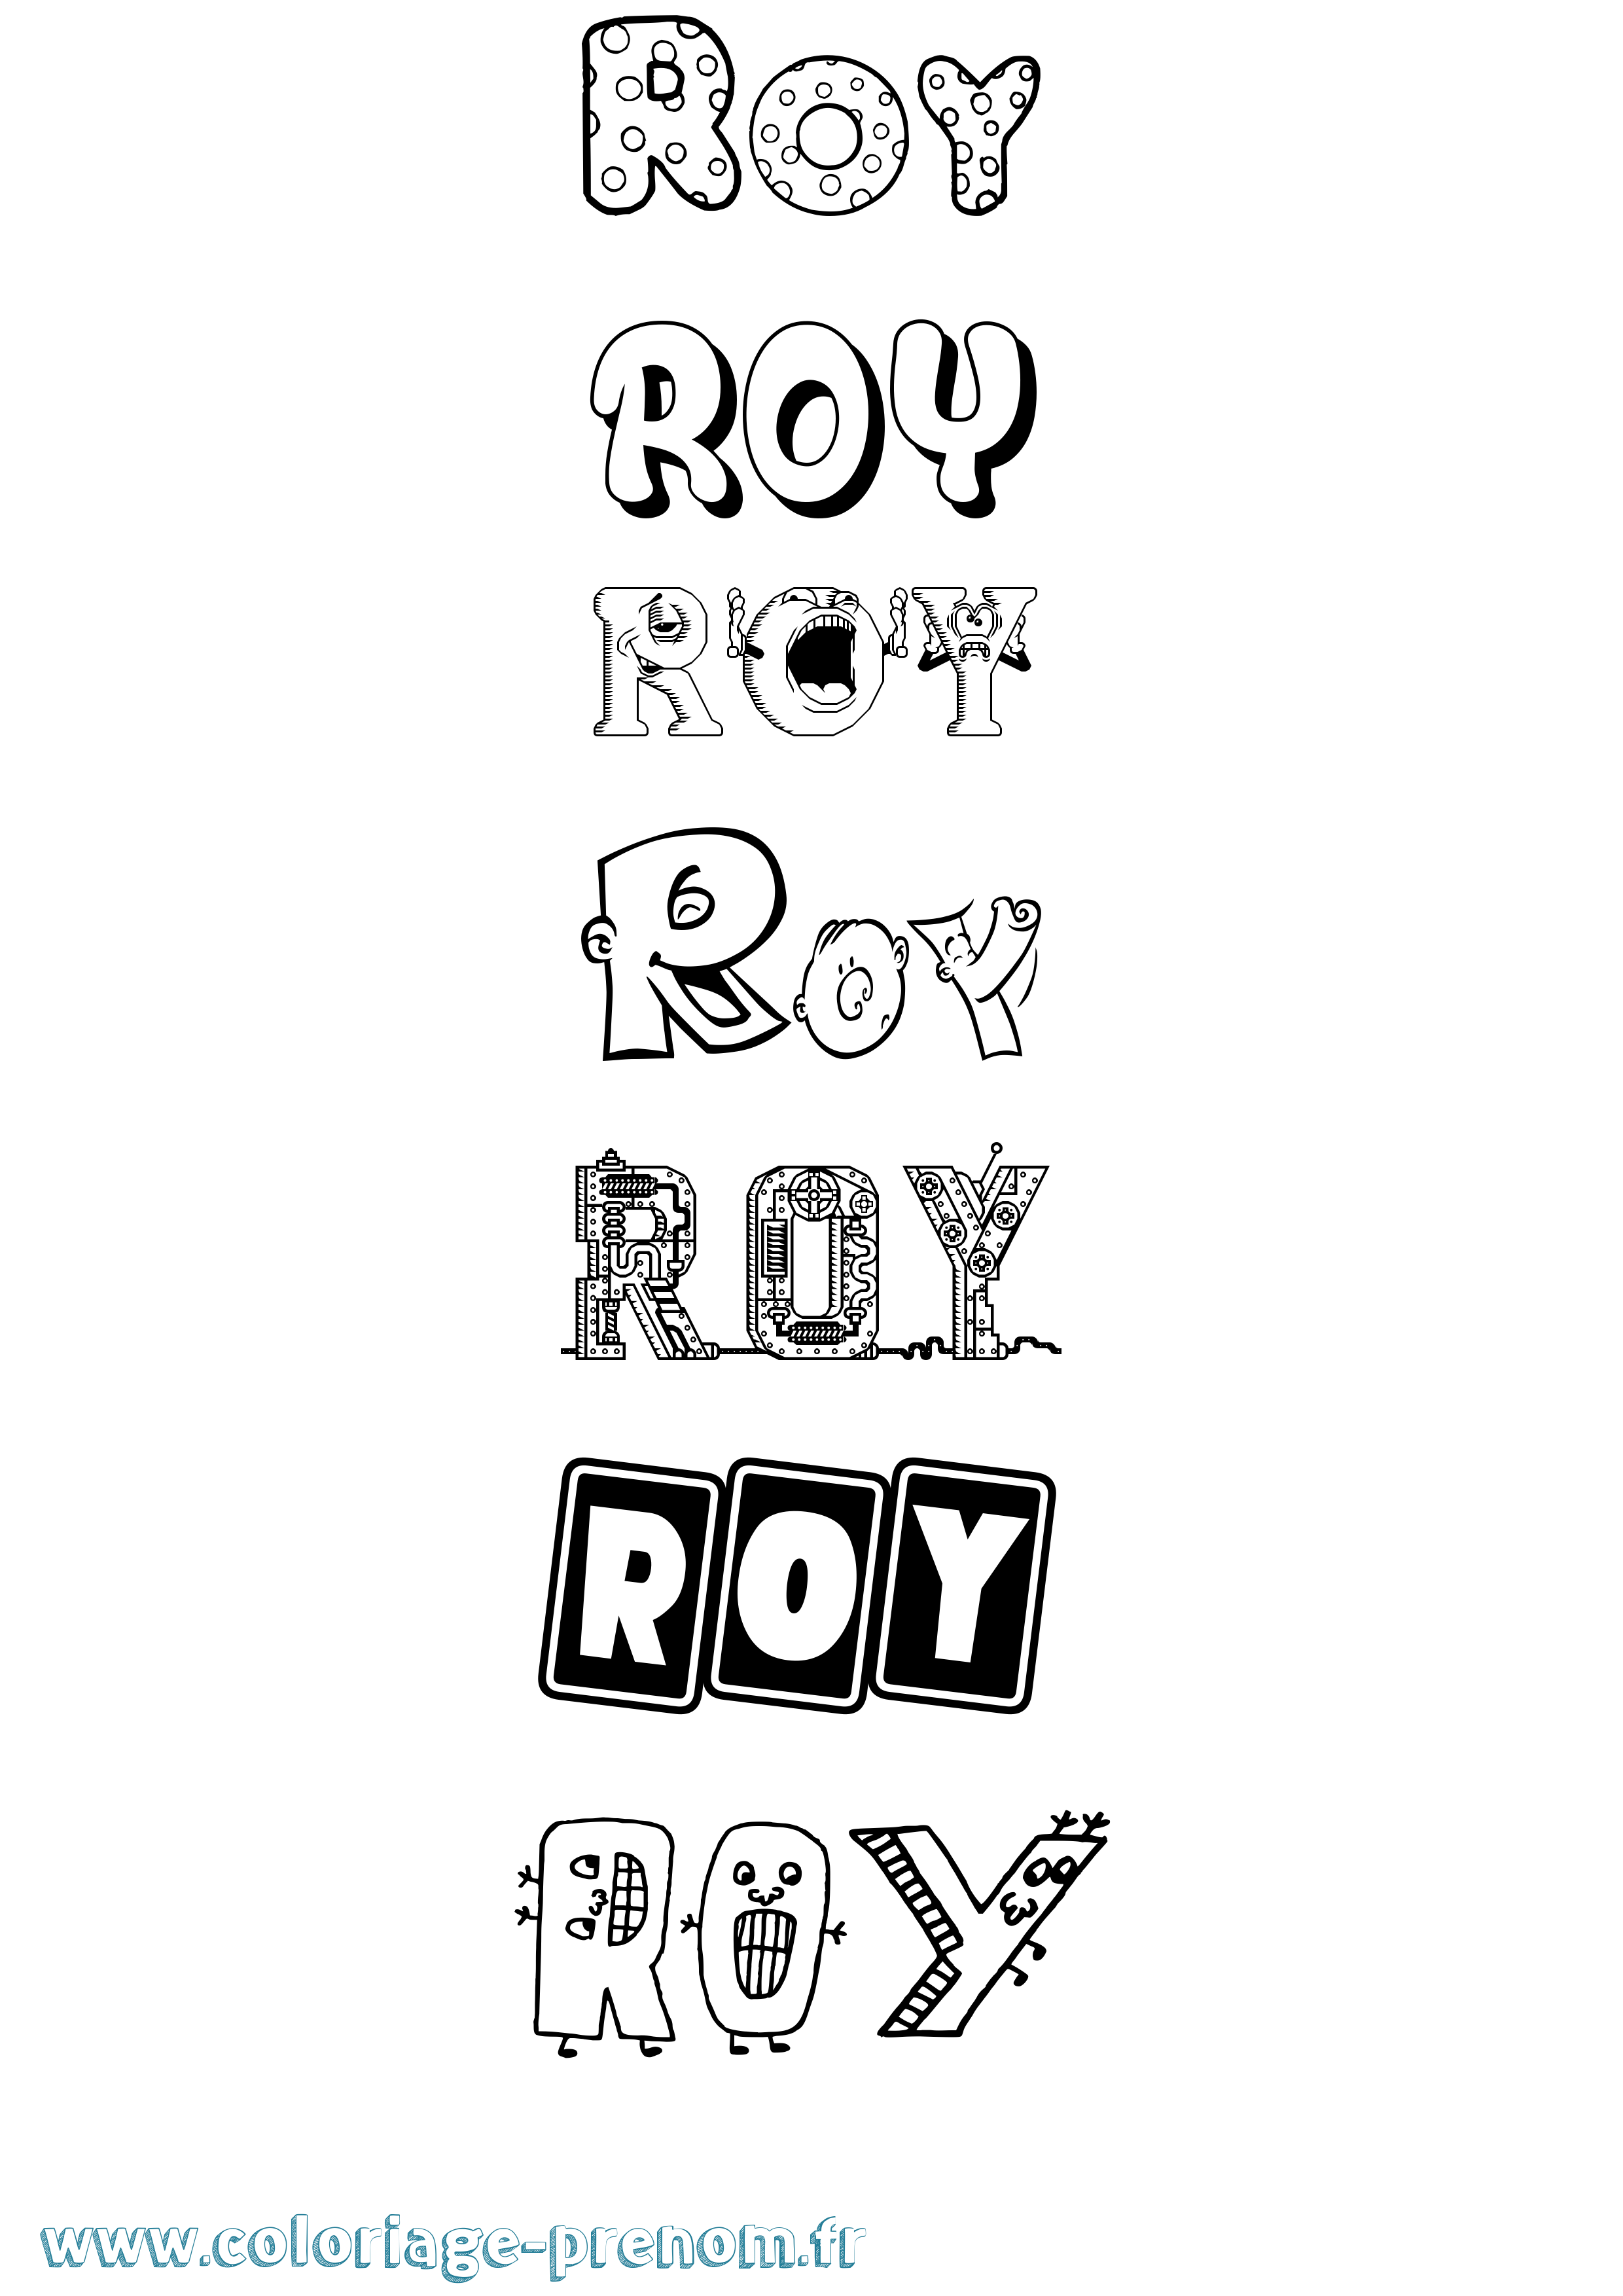 Coloriage prénom Roy